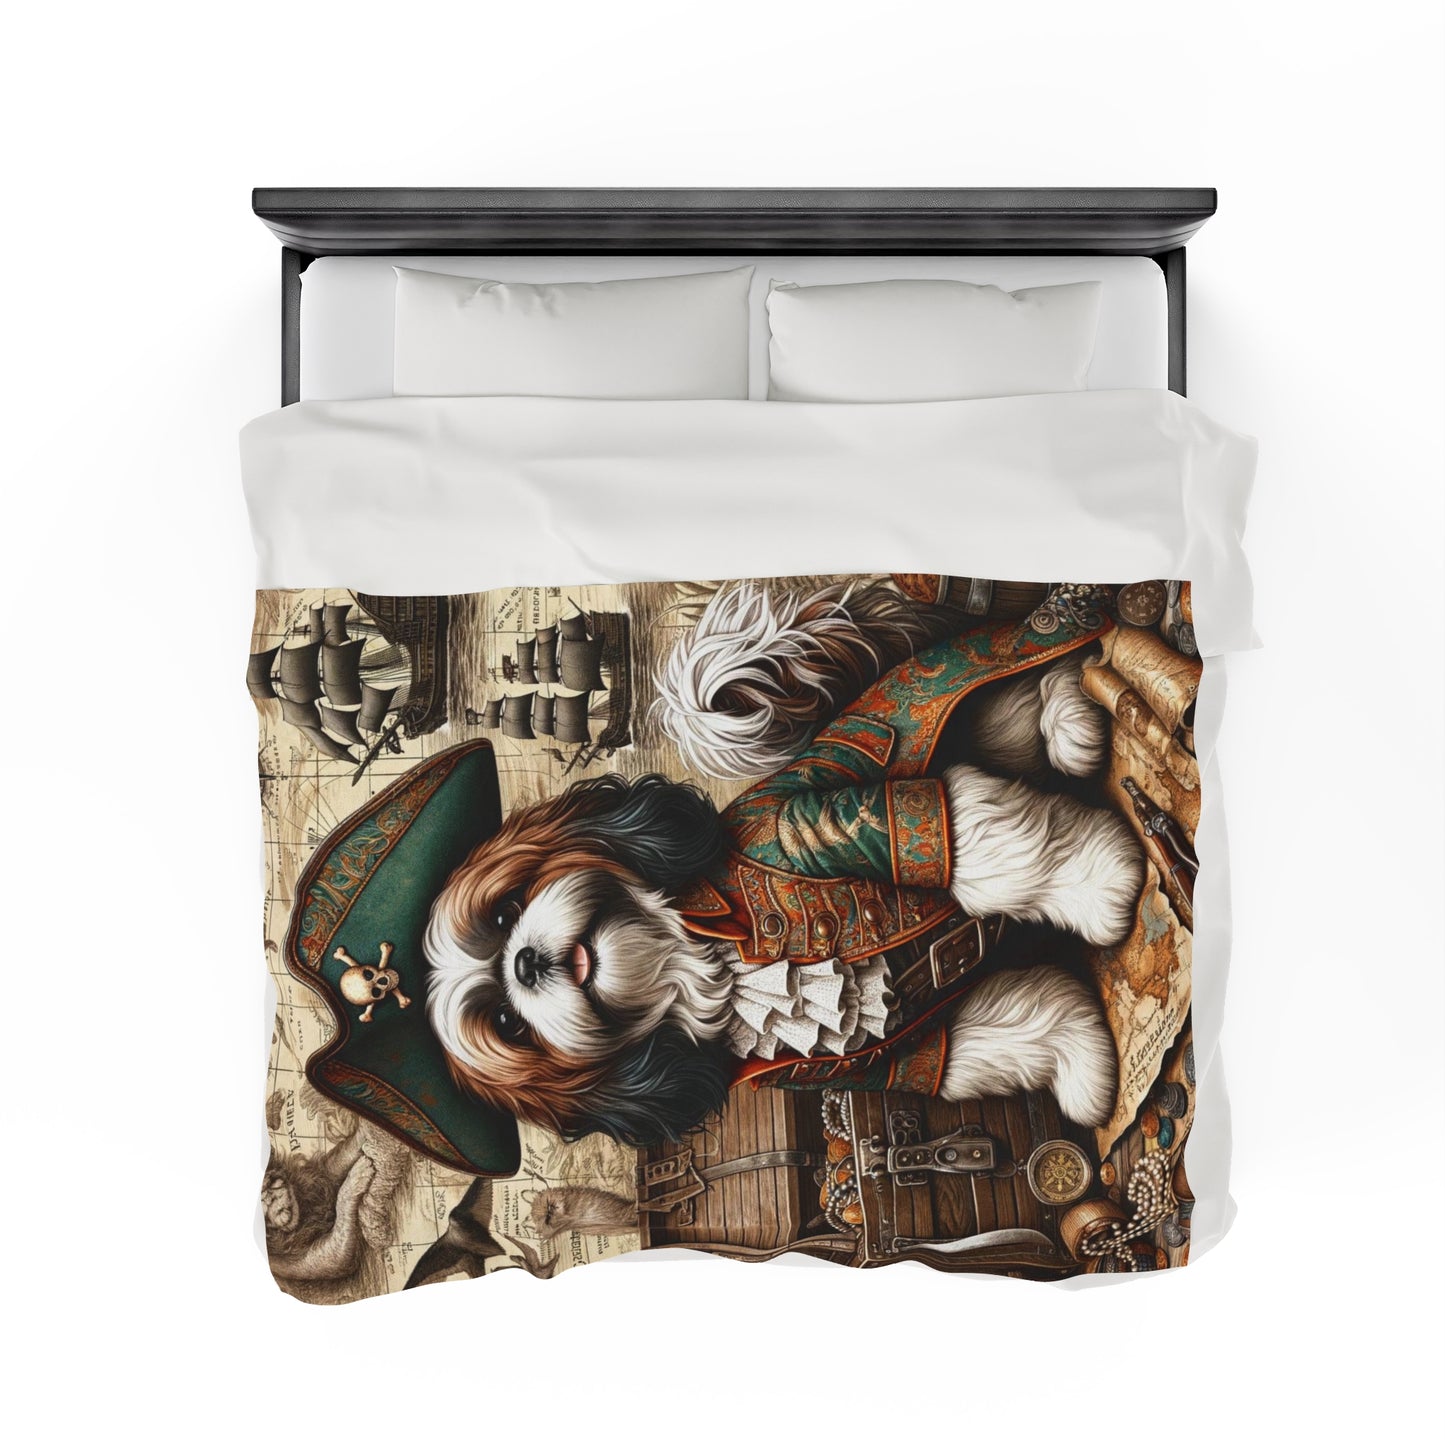 Cute  Shih Tzu Dog Pirate-Themed Velveteen Plush Blanket -  Soft Throw,  Unique Dog Print Design - Cozy Home Decor & Gift Idea"